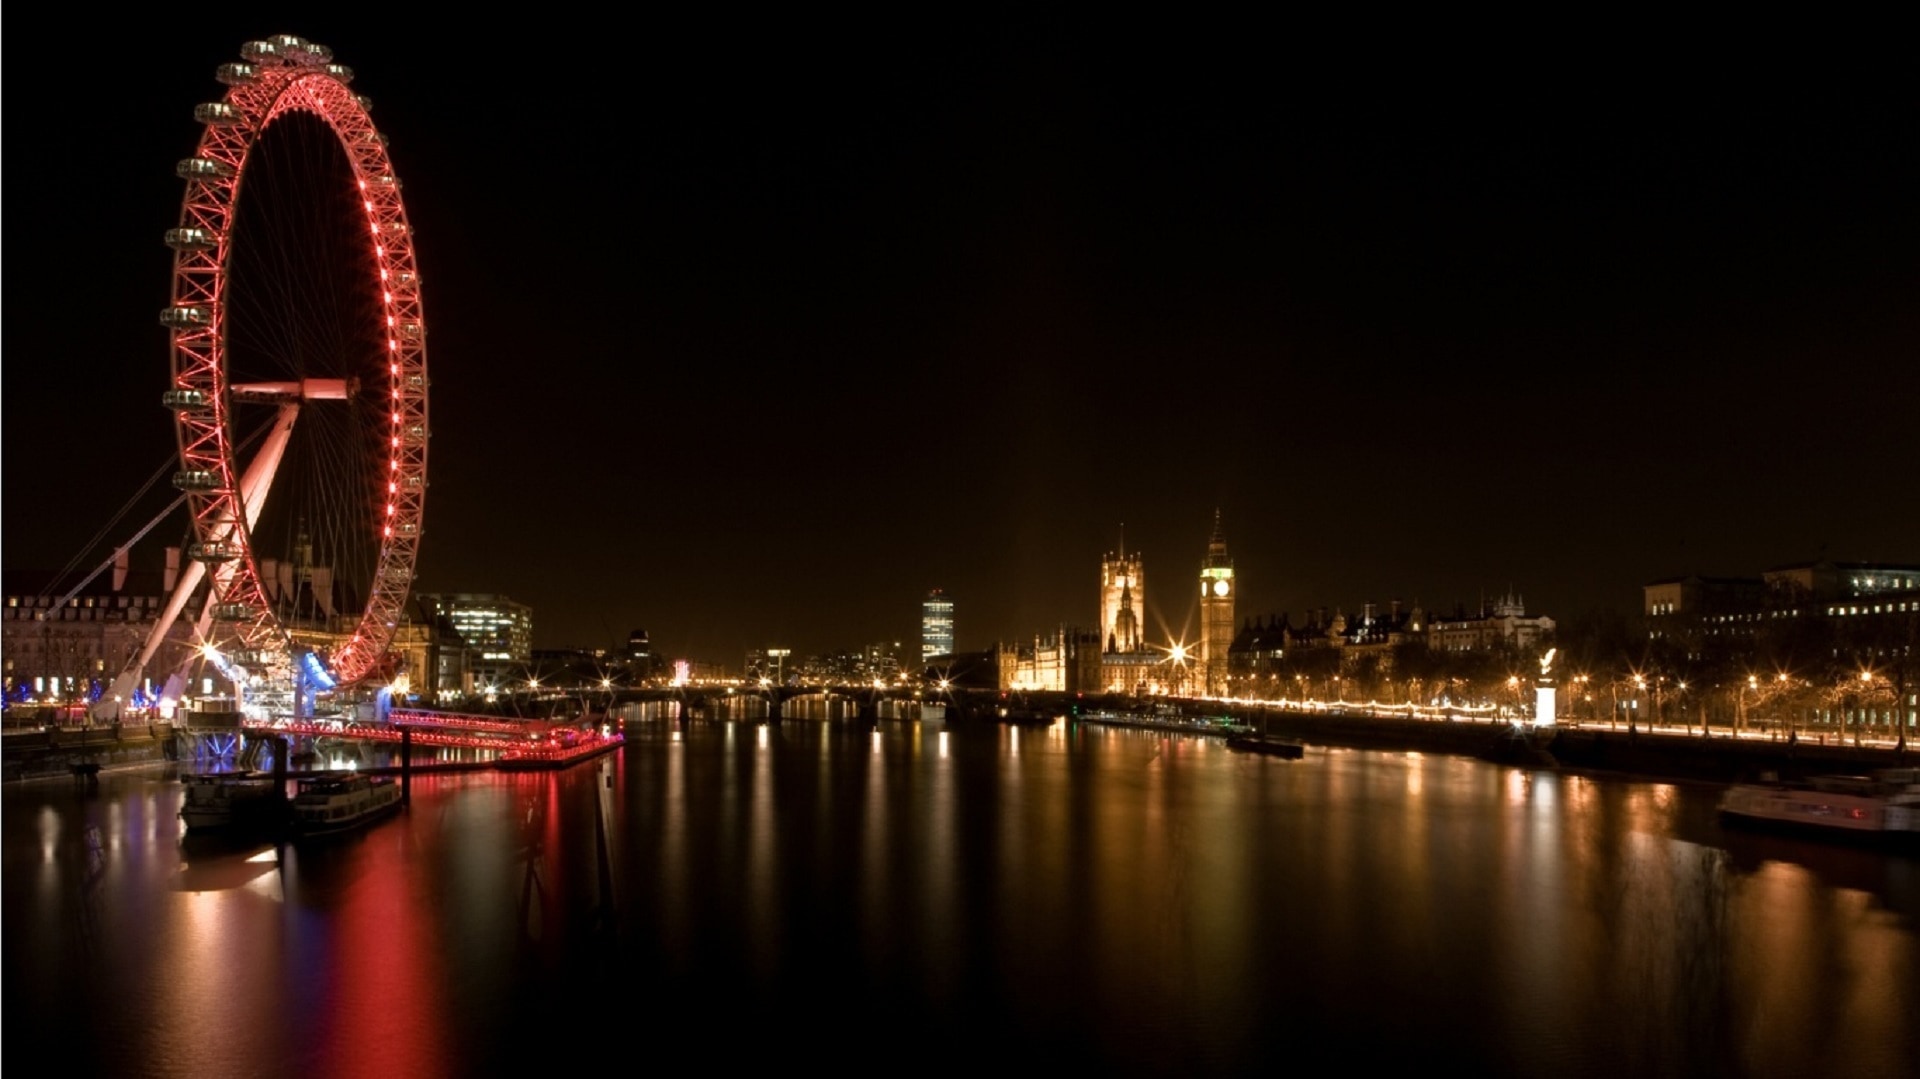 Thames River, London, Reflections, Night, ferris wheel, night